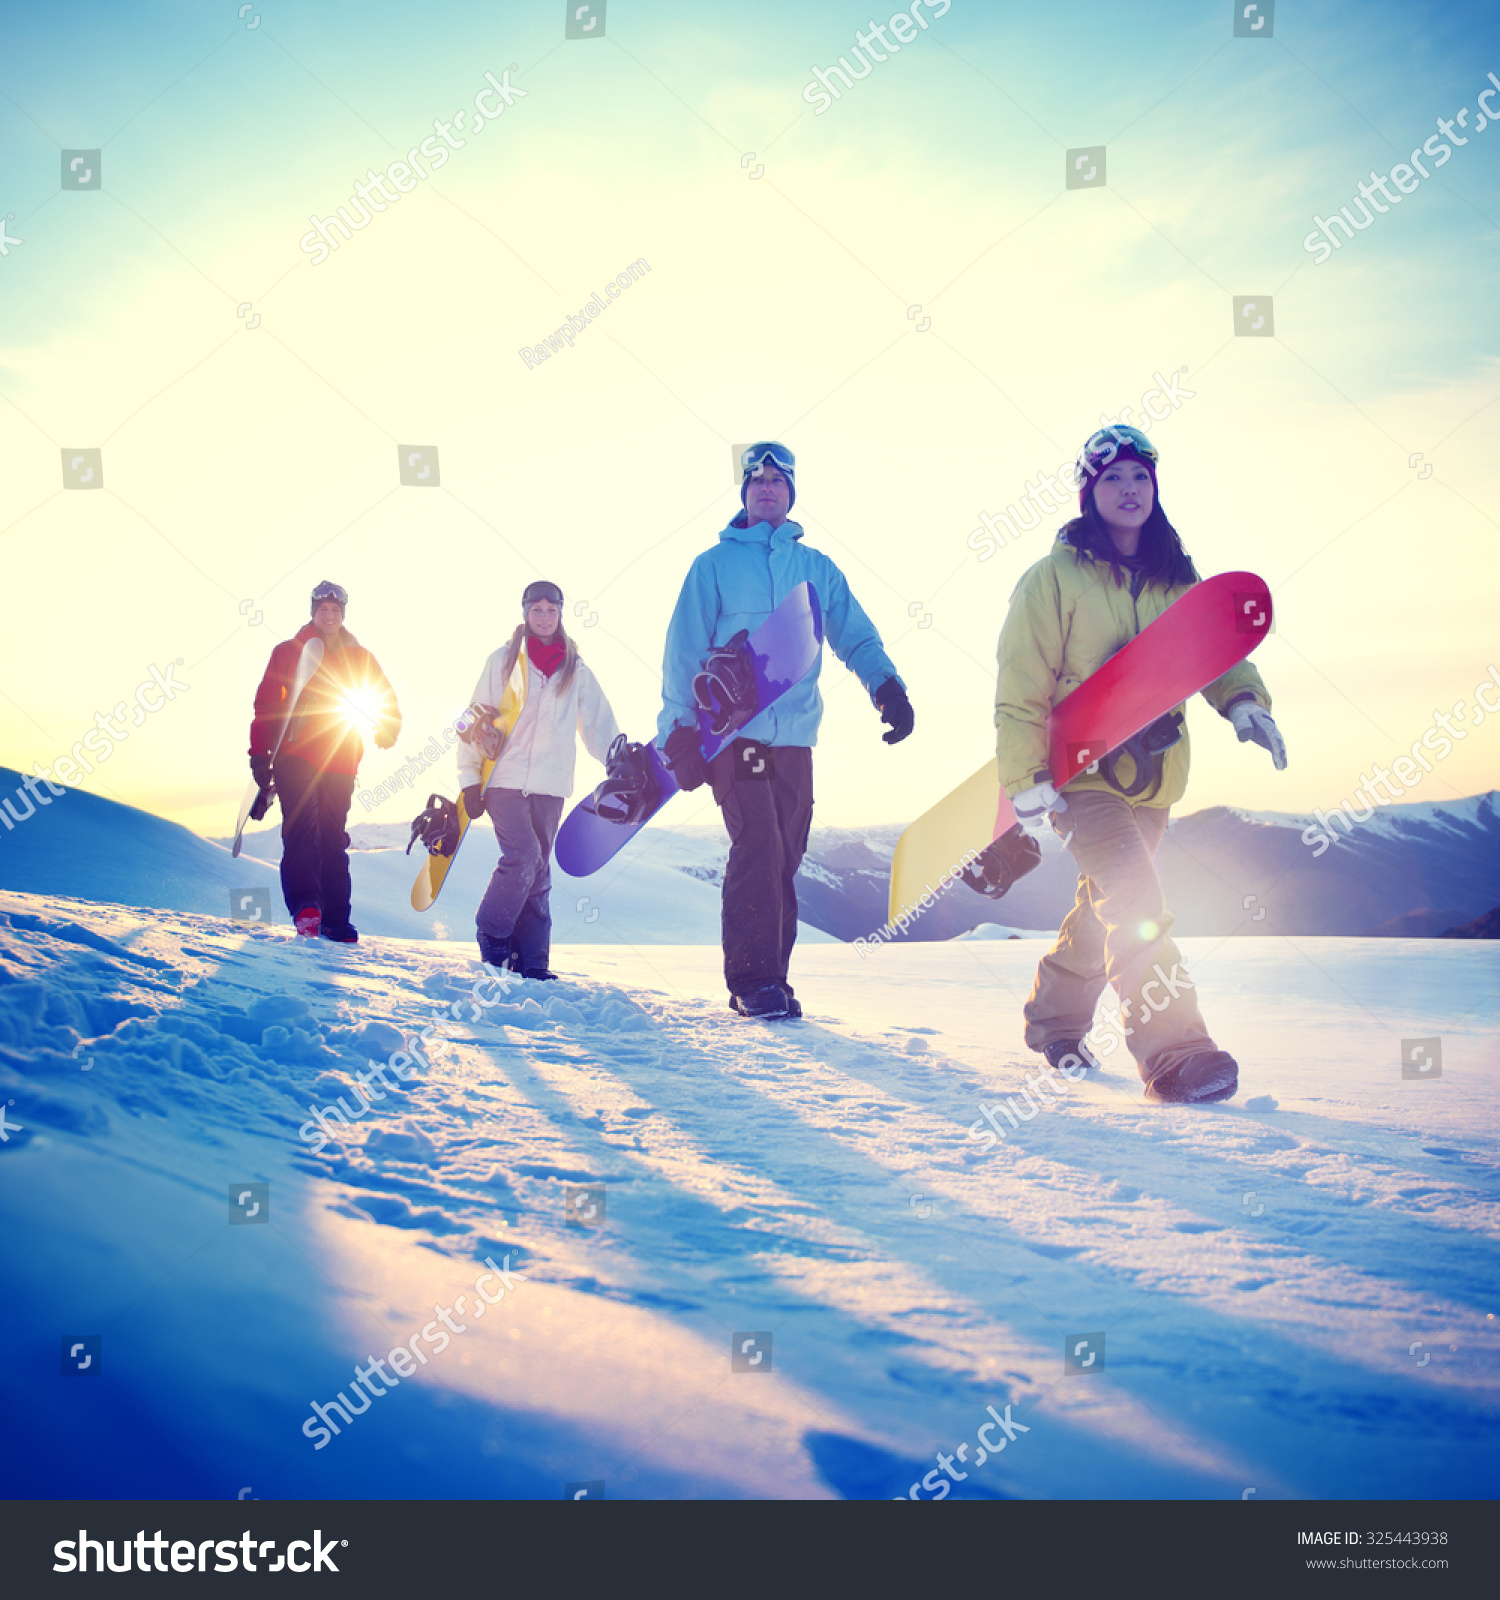 People Snowboard Winter Sport Friendship Concept #325443938